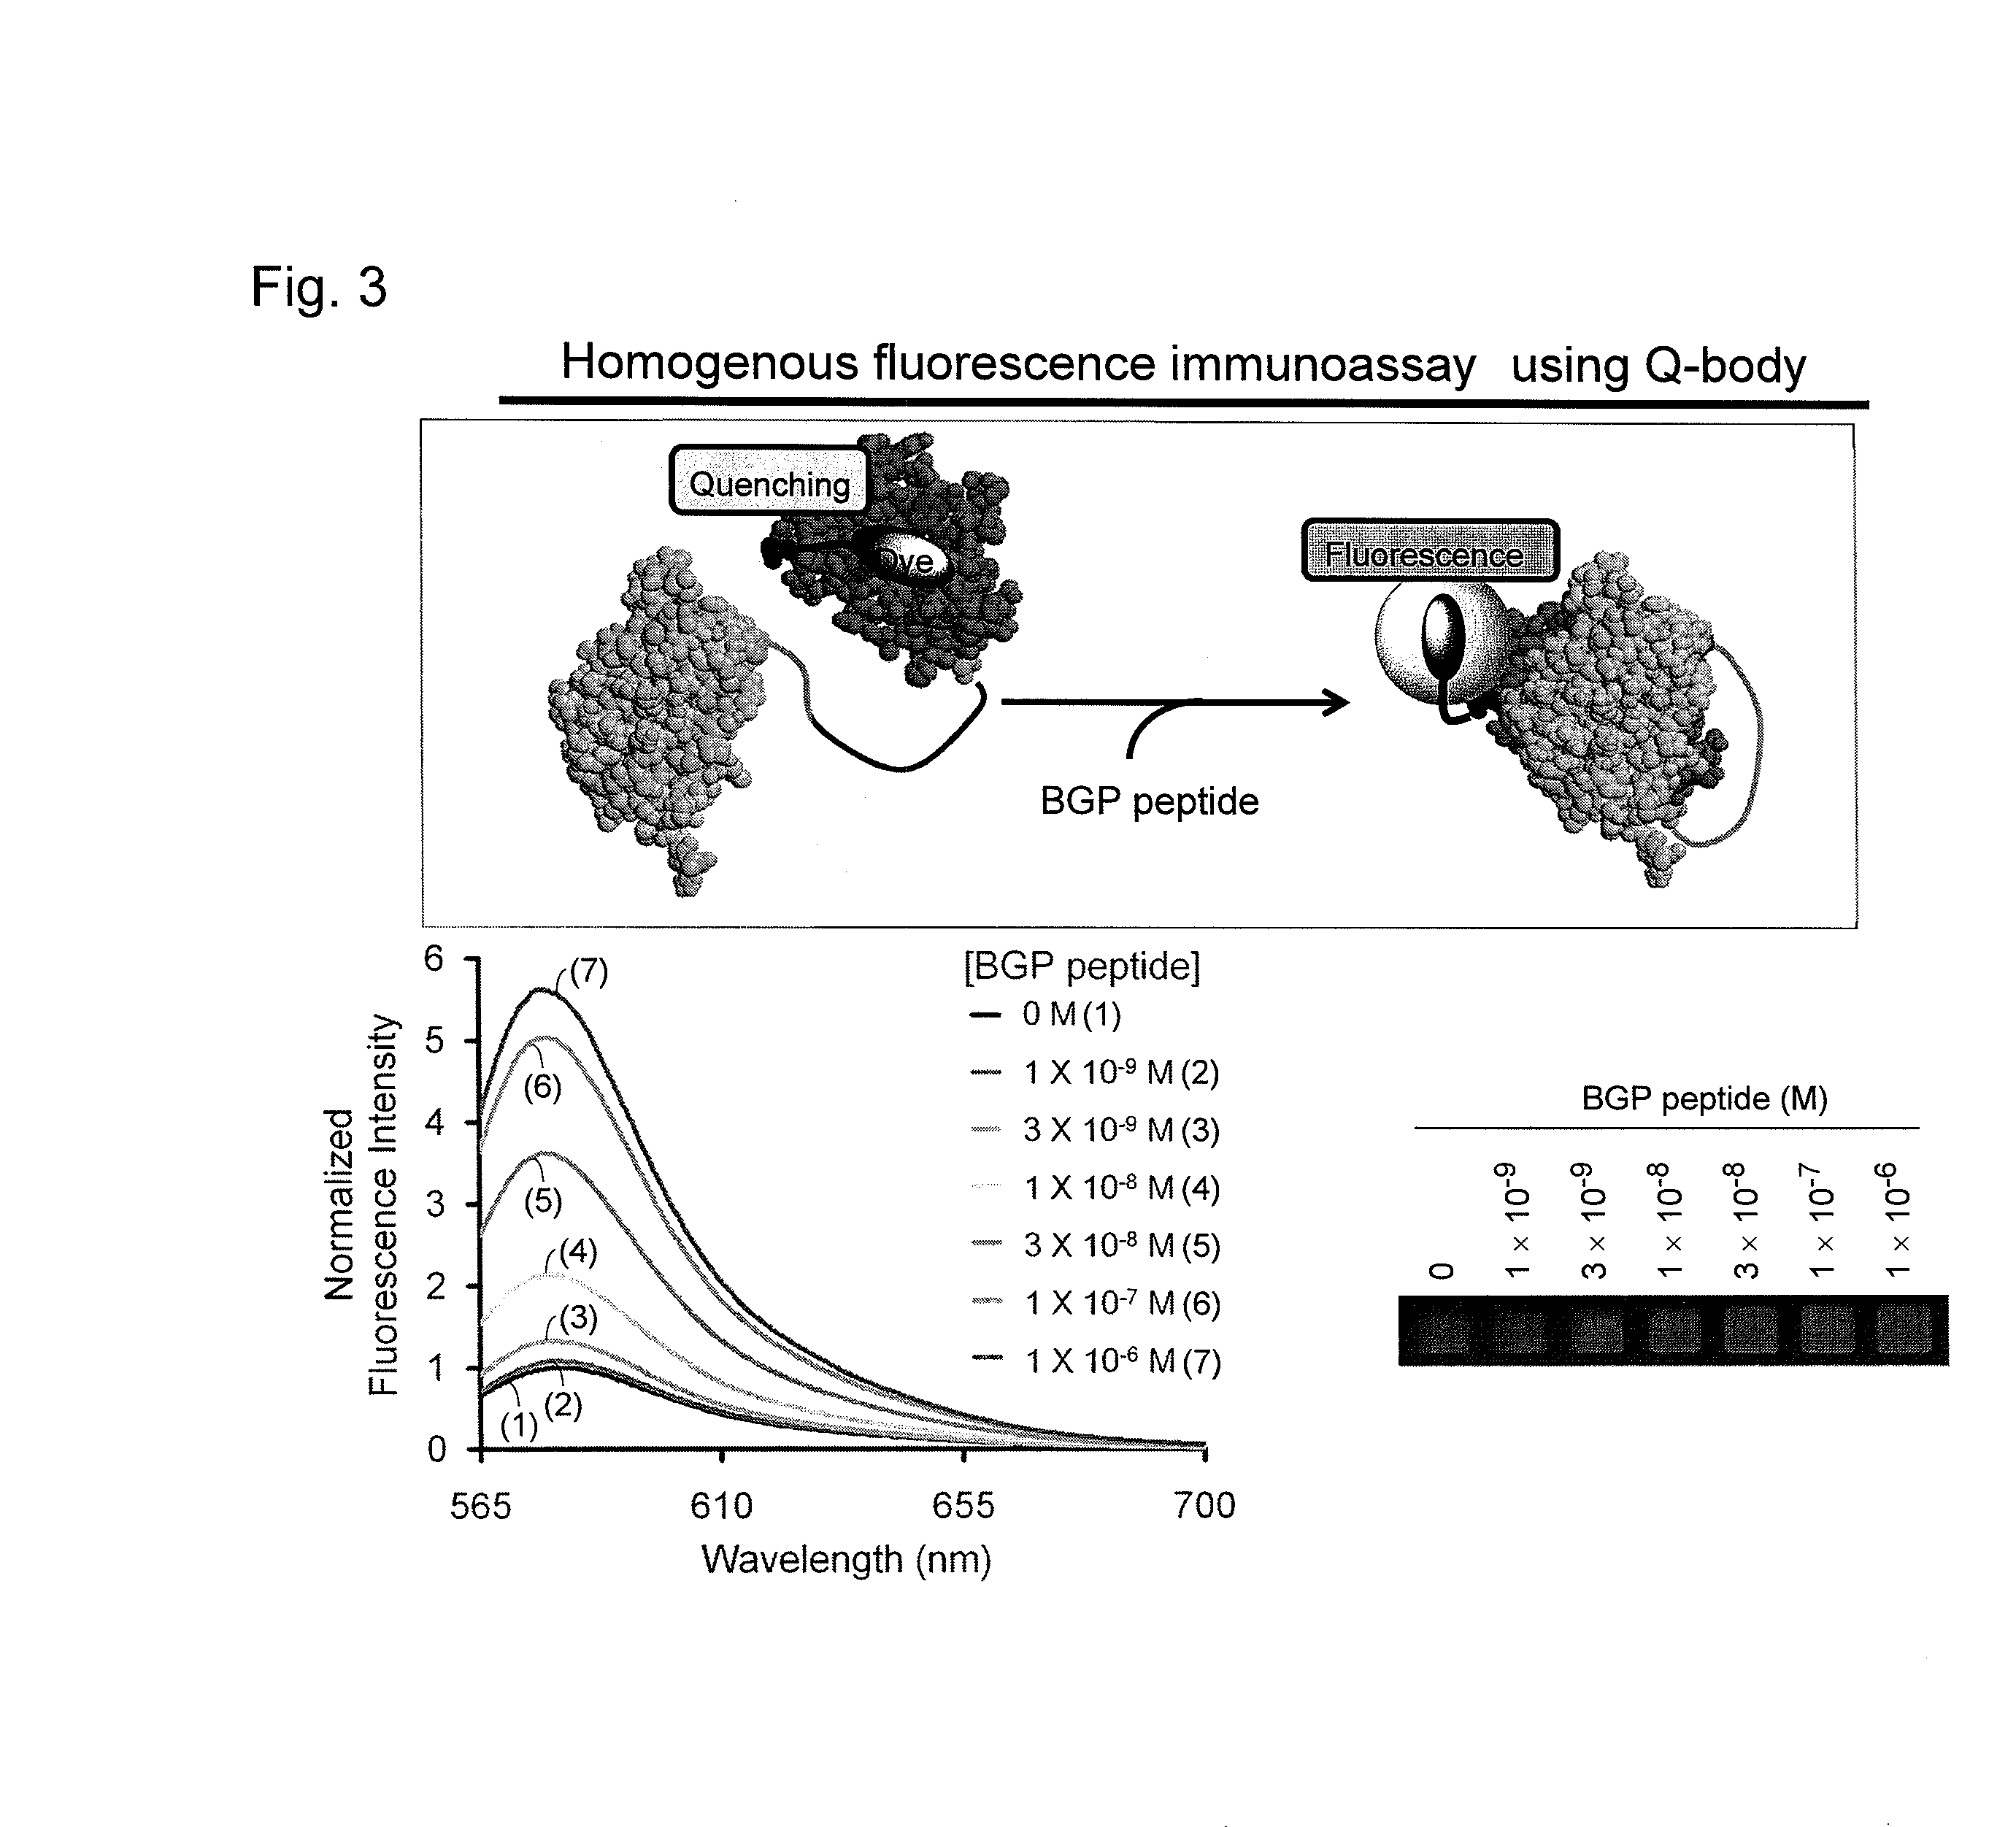 Fluorescence immunoassay using polypeptide complex containing fluoro-labeled antibody variable region